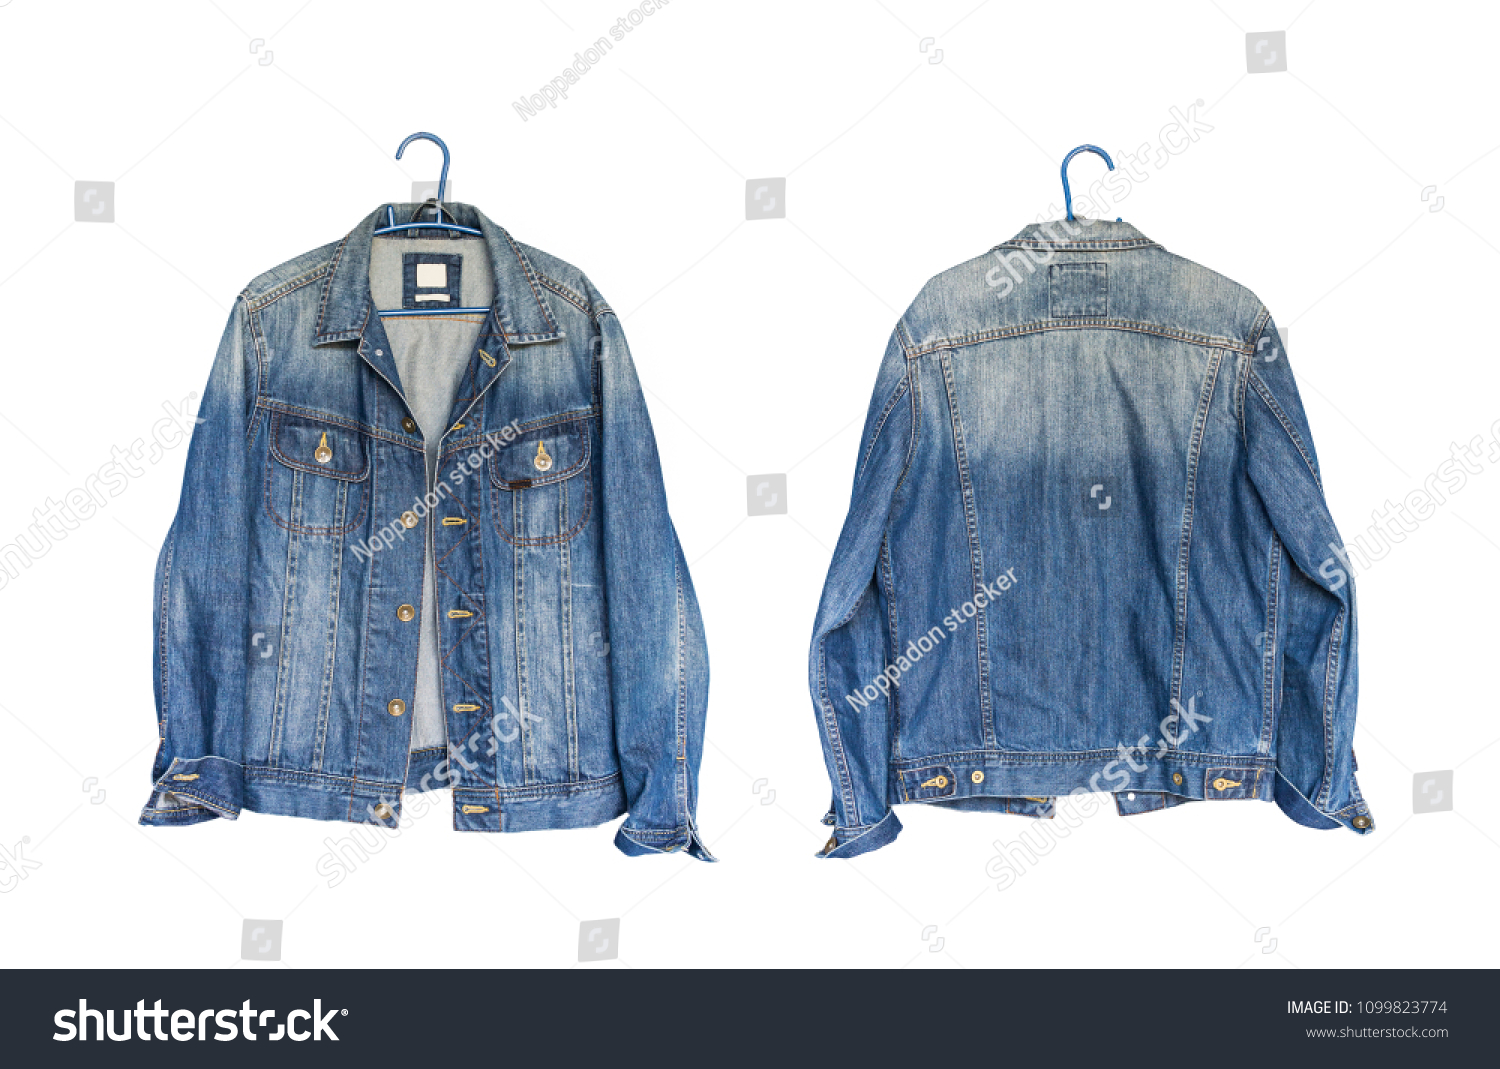 2,434 Jean jacket front back Images, Stock Photos & Vectors | Shutterstock